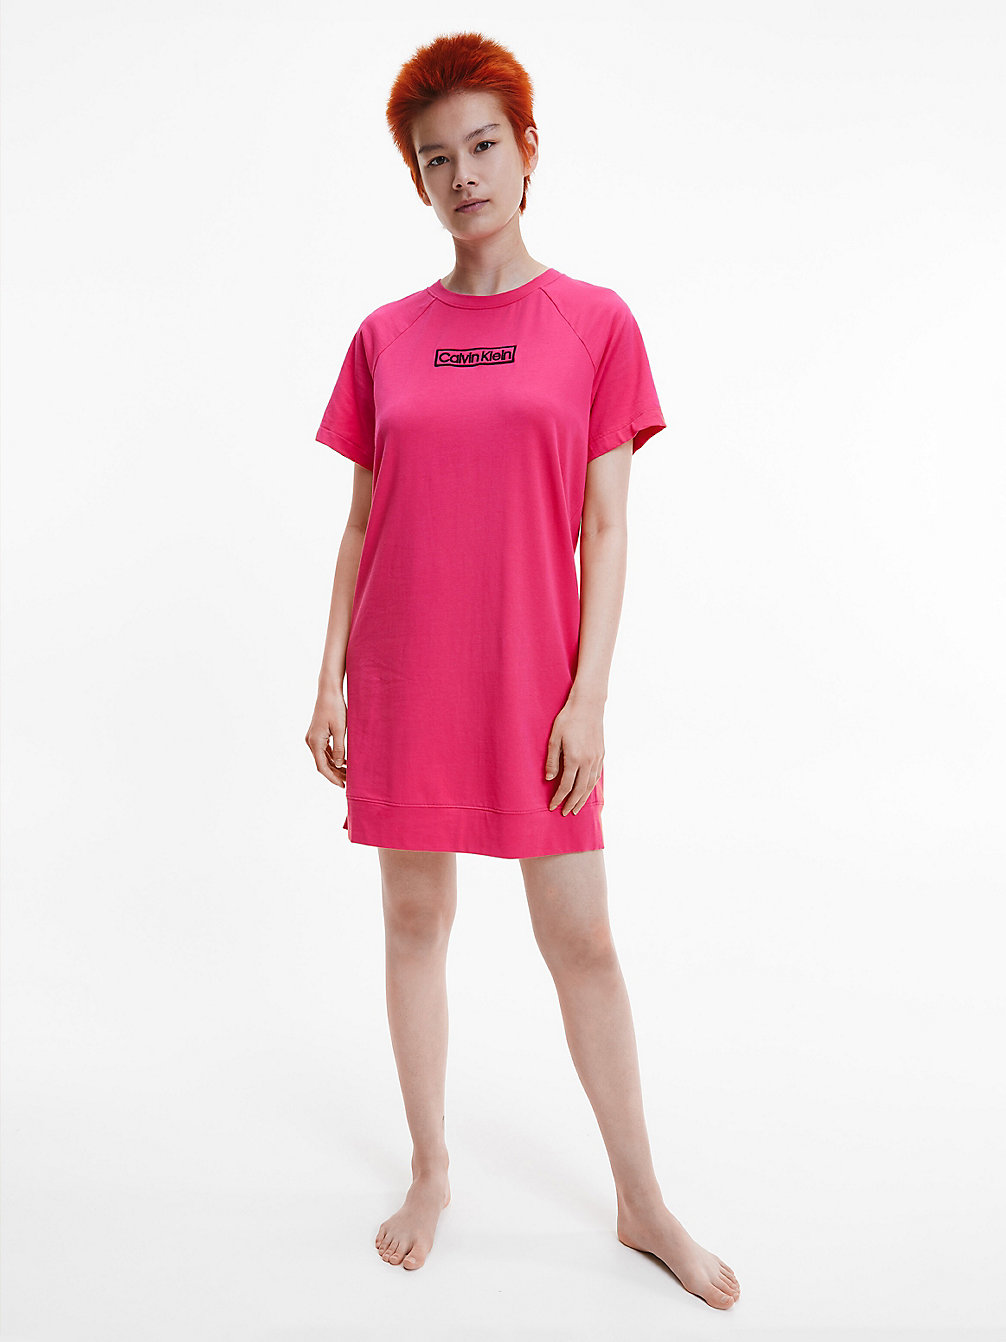 PINK SPLENDOR > Ночная рубашка - Reimagined Heritage > undefined Женщины - Calvin Klein